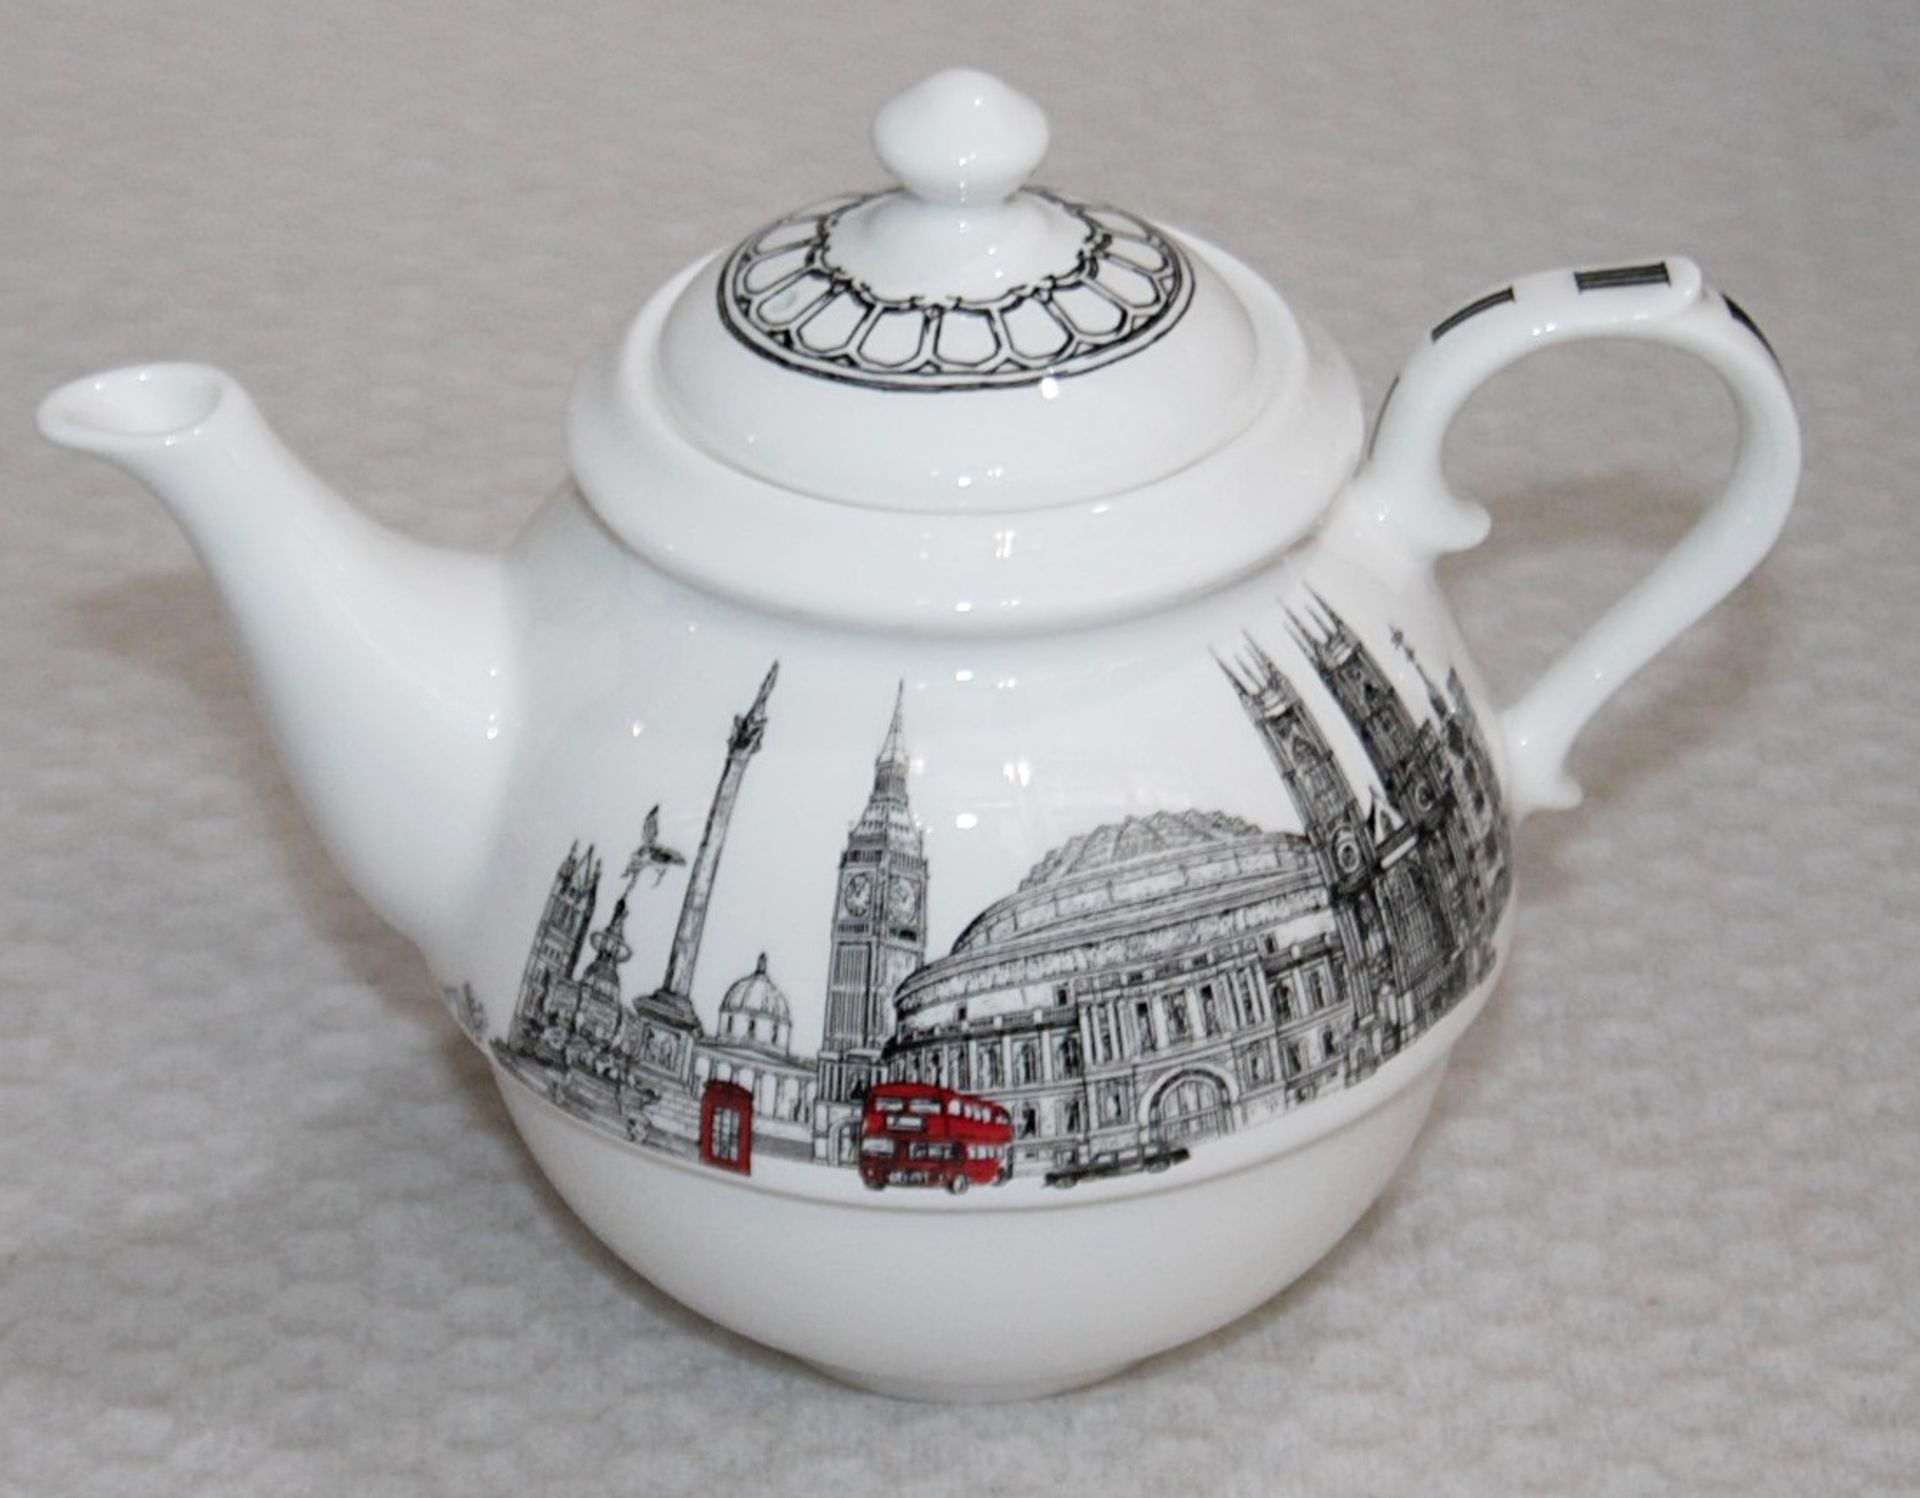 1 x HALCYON DAYS 'London Icons' Fine Bone China Tea Pot, With Graphic Print Decoration - Original - Image 5 of 9